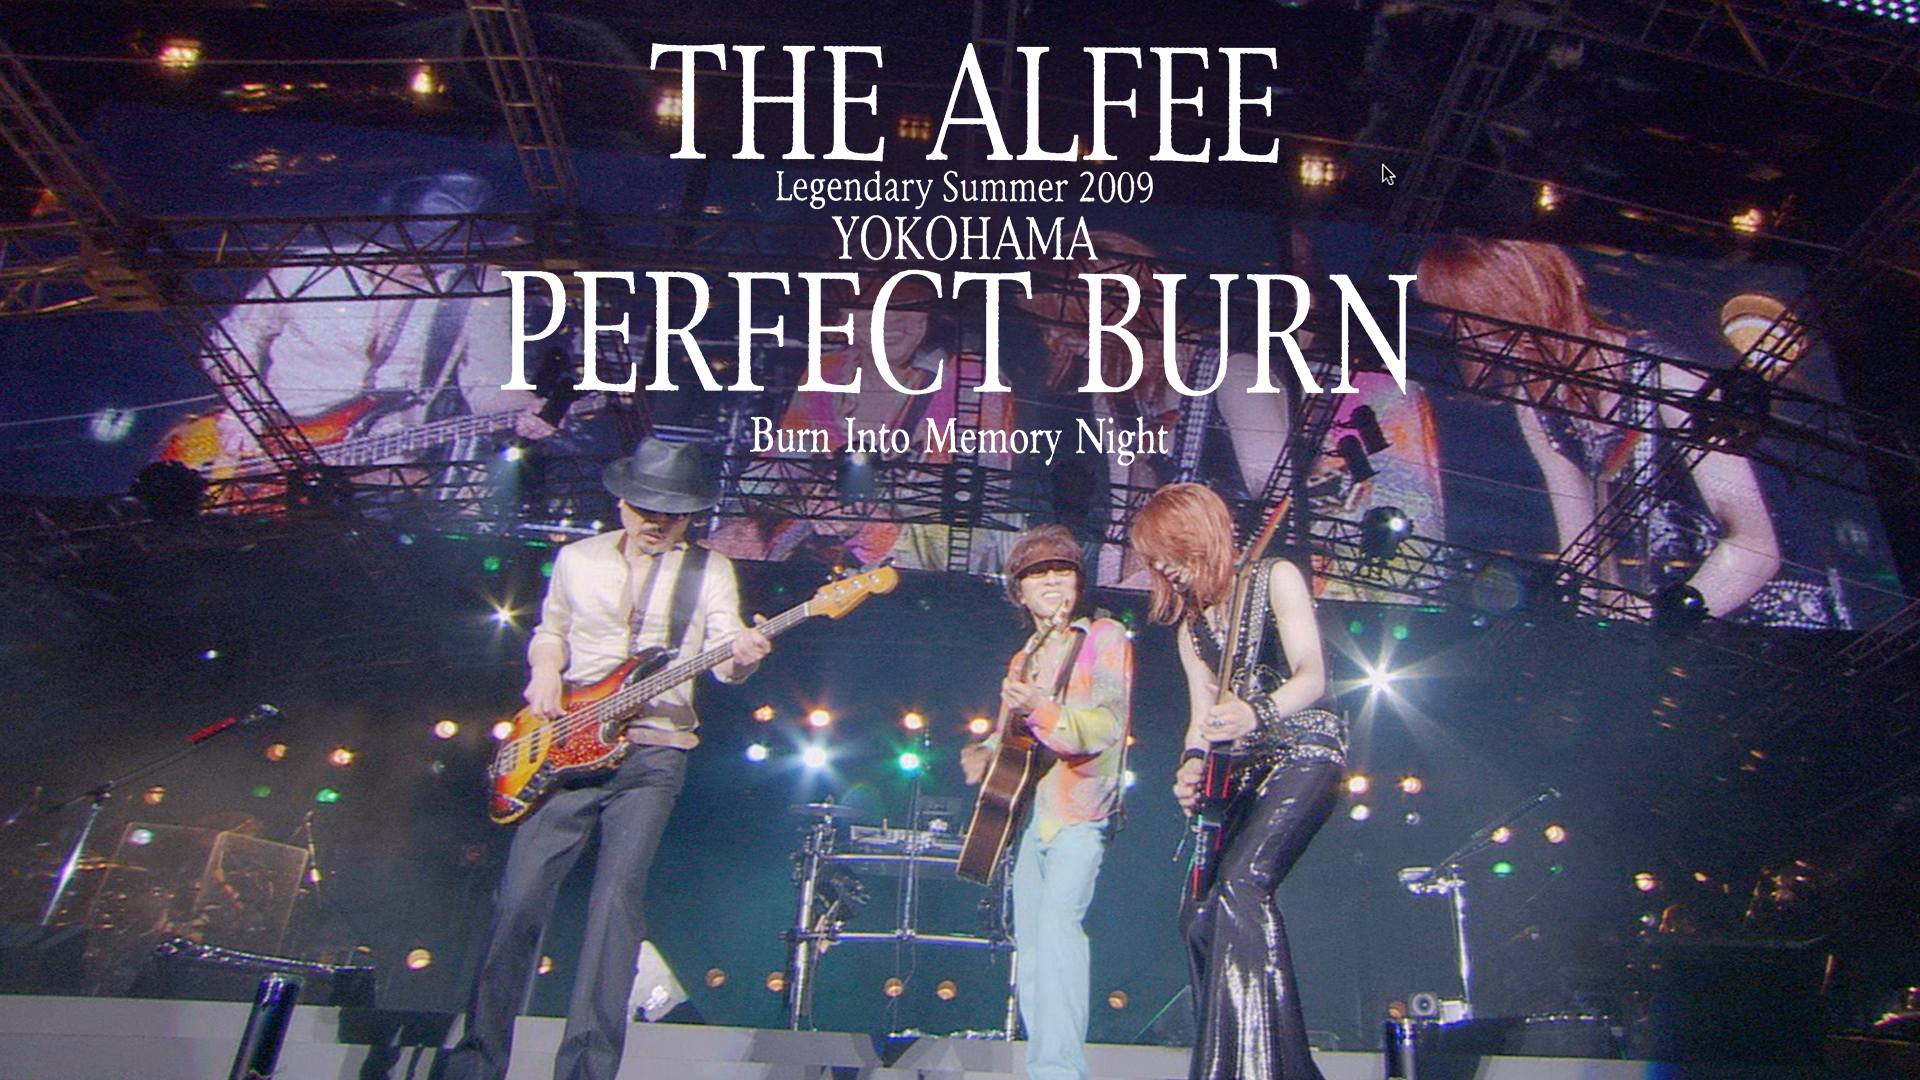 THE ALFEE Legendary Summer 2009 YOKOHAMA PERFECT BURN Burn Into 